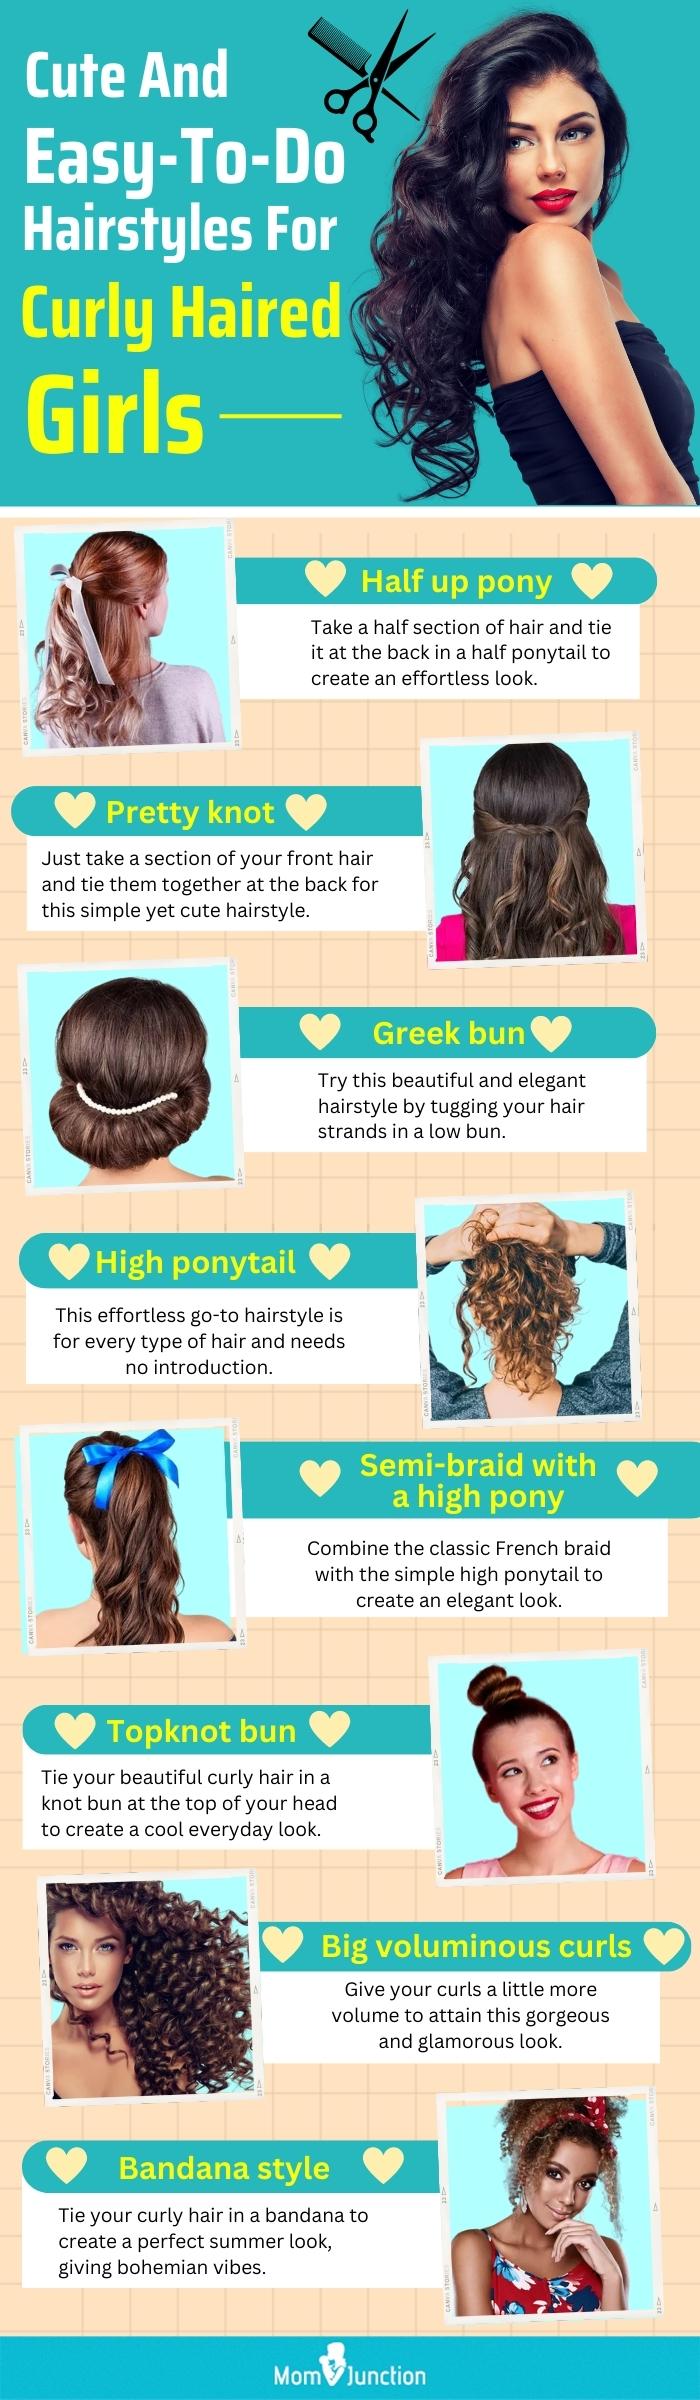 4 Ways to Do Grecian Hairstyles - wikiHow